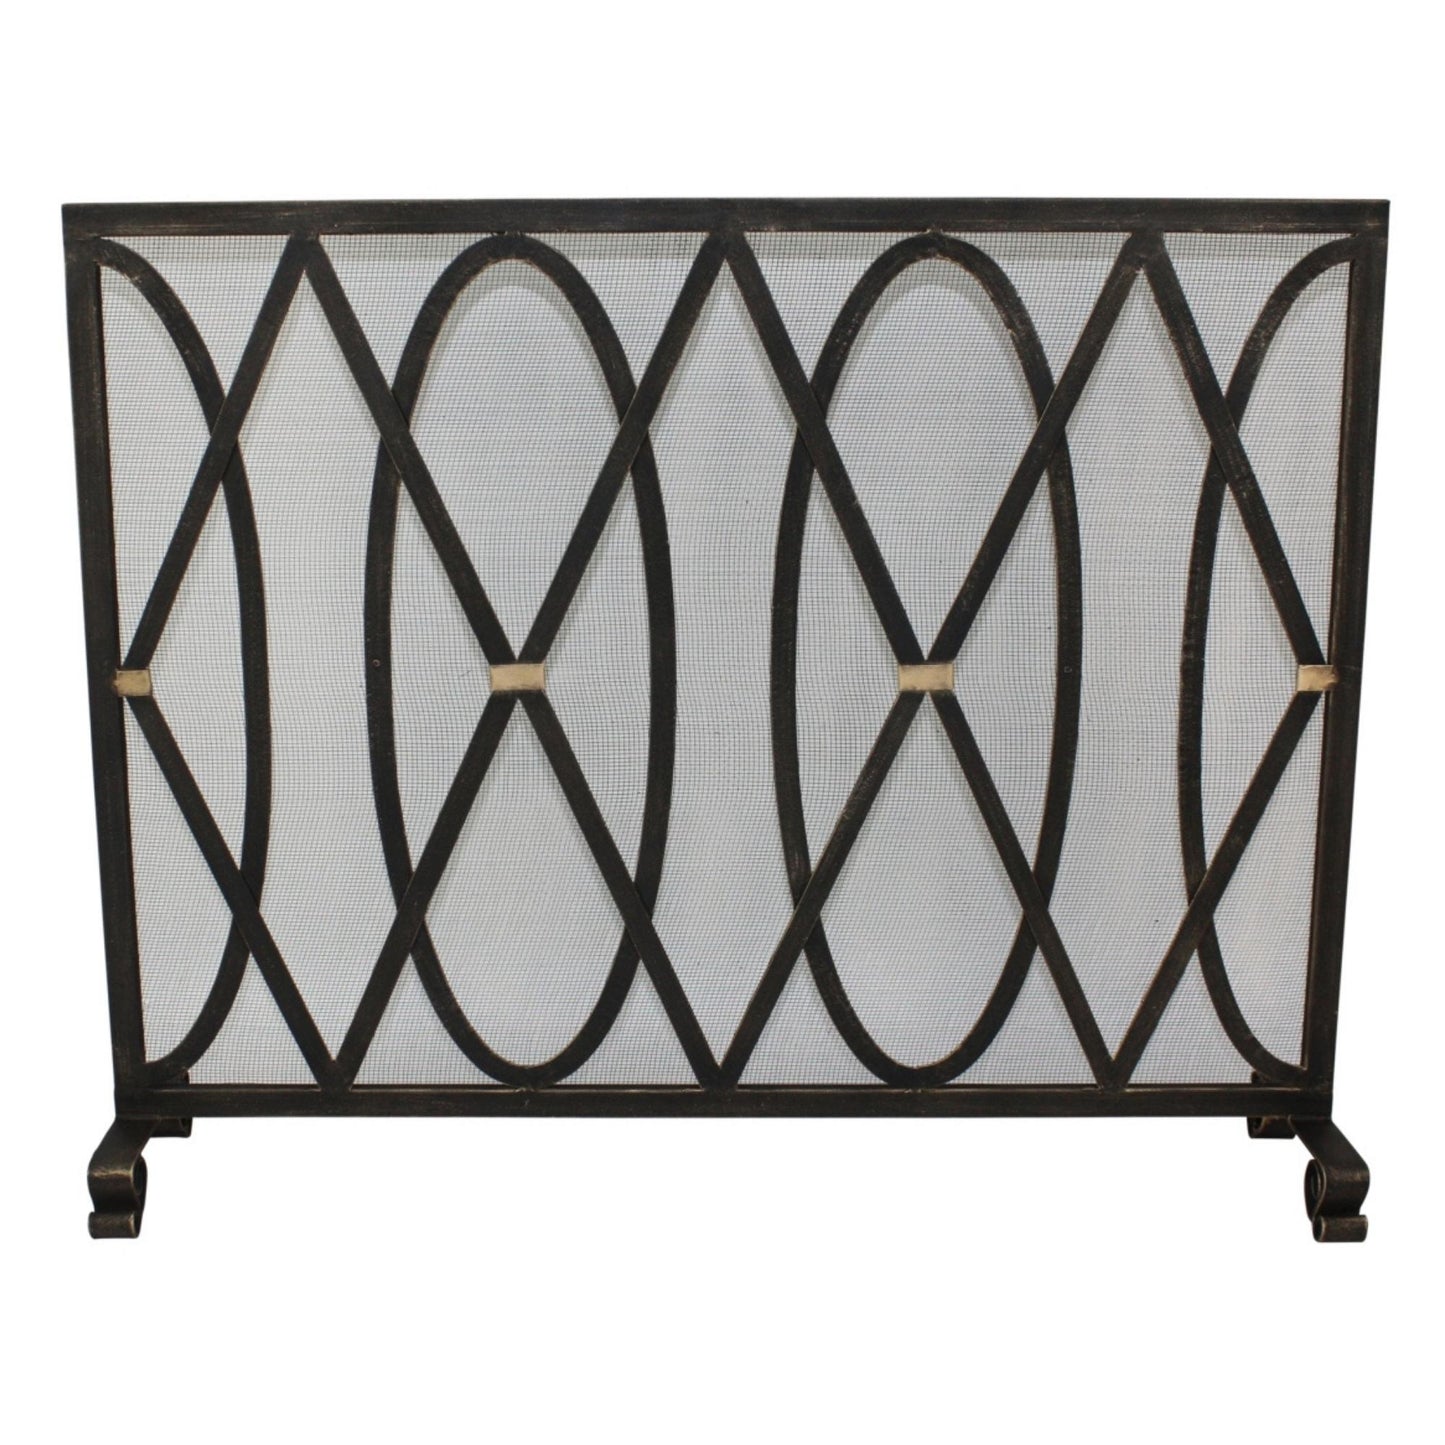 Oval and Diamond Design Single Panel Iron Fire Screen with Mesh - Burnished Gold Iron Screen | InsideOutCatalog.com